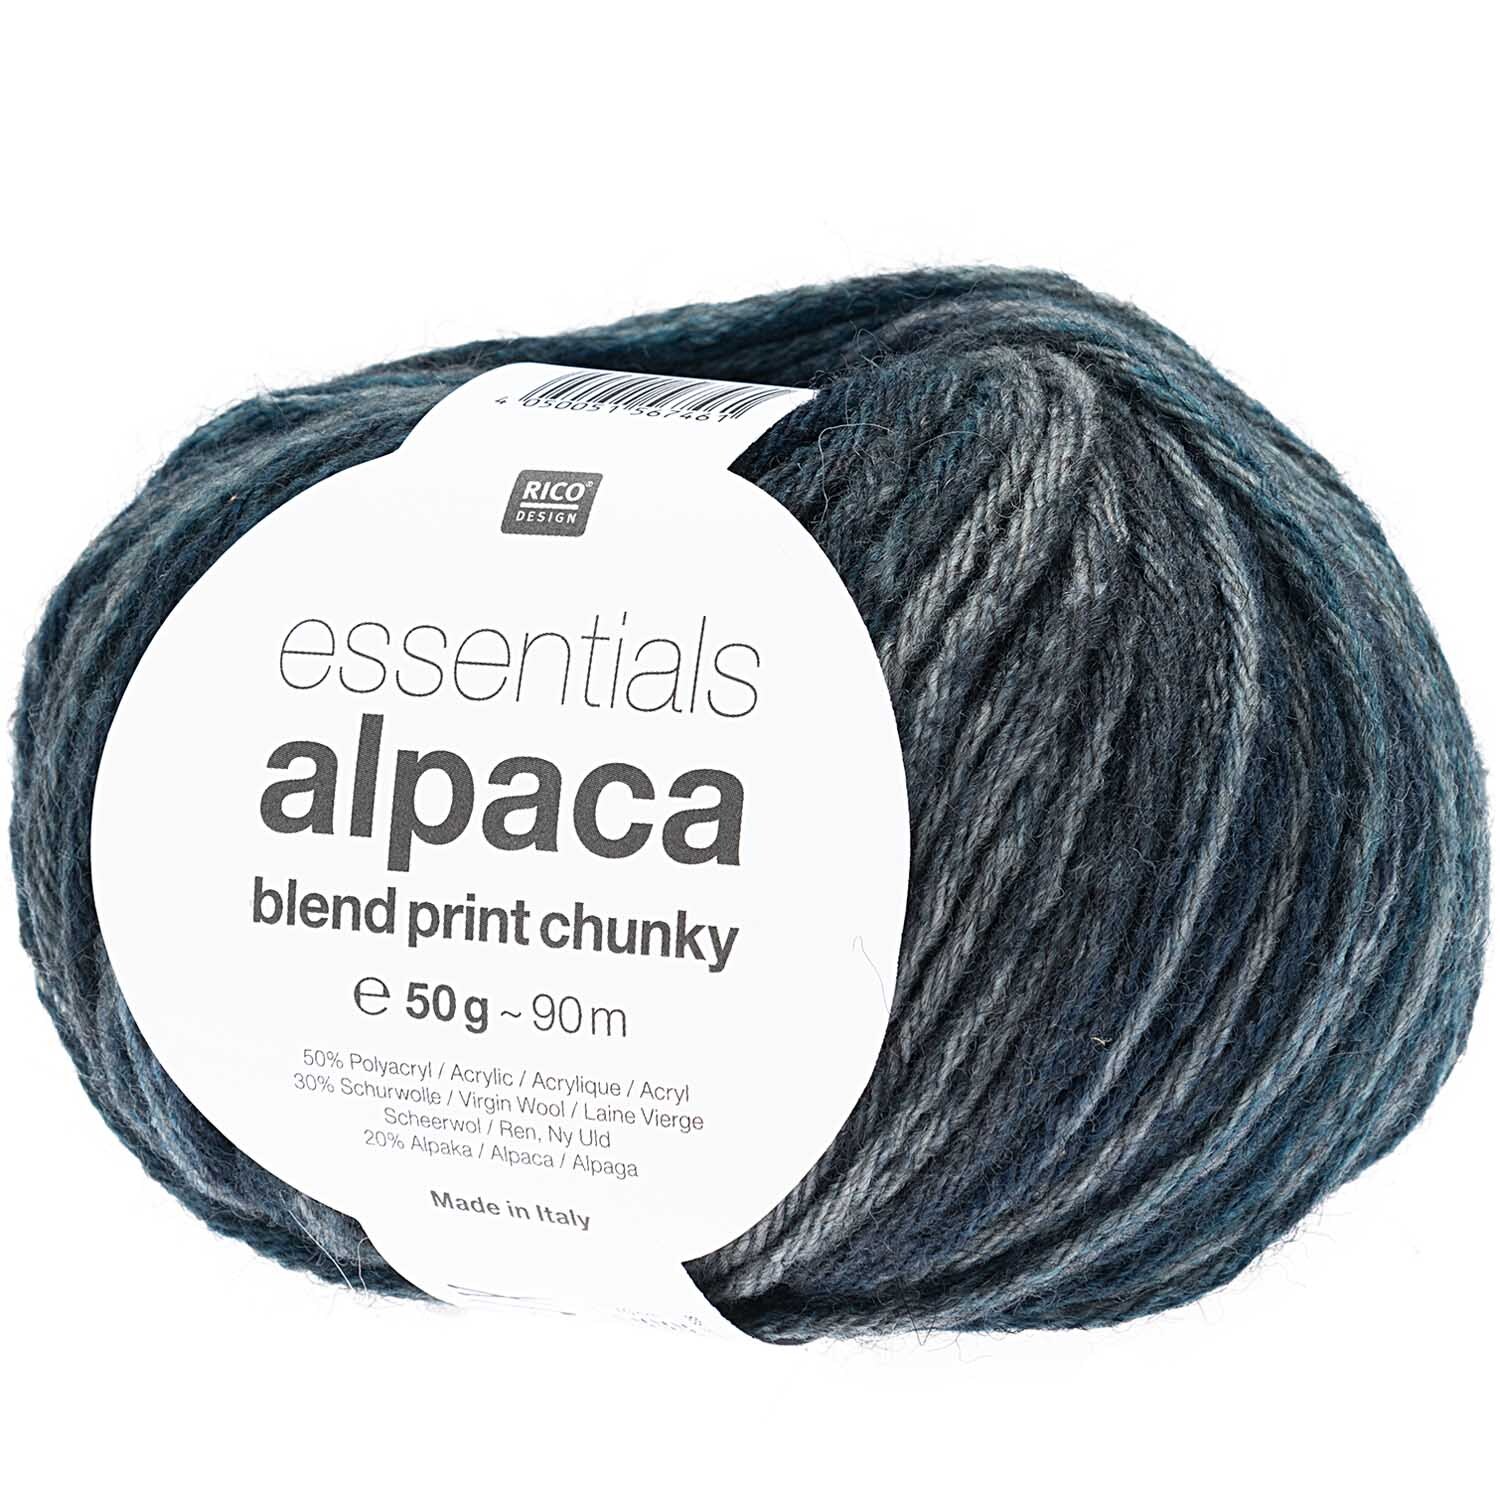 Essentials Alpaca Blend Print Chunky